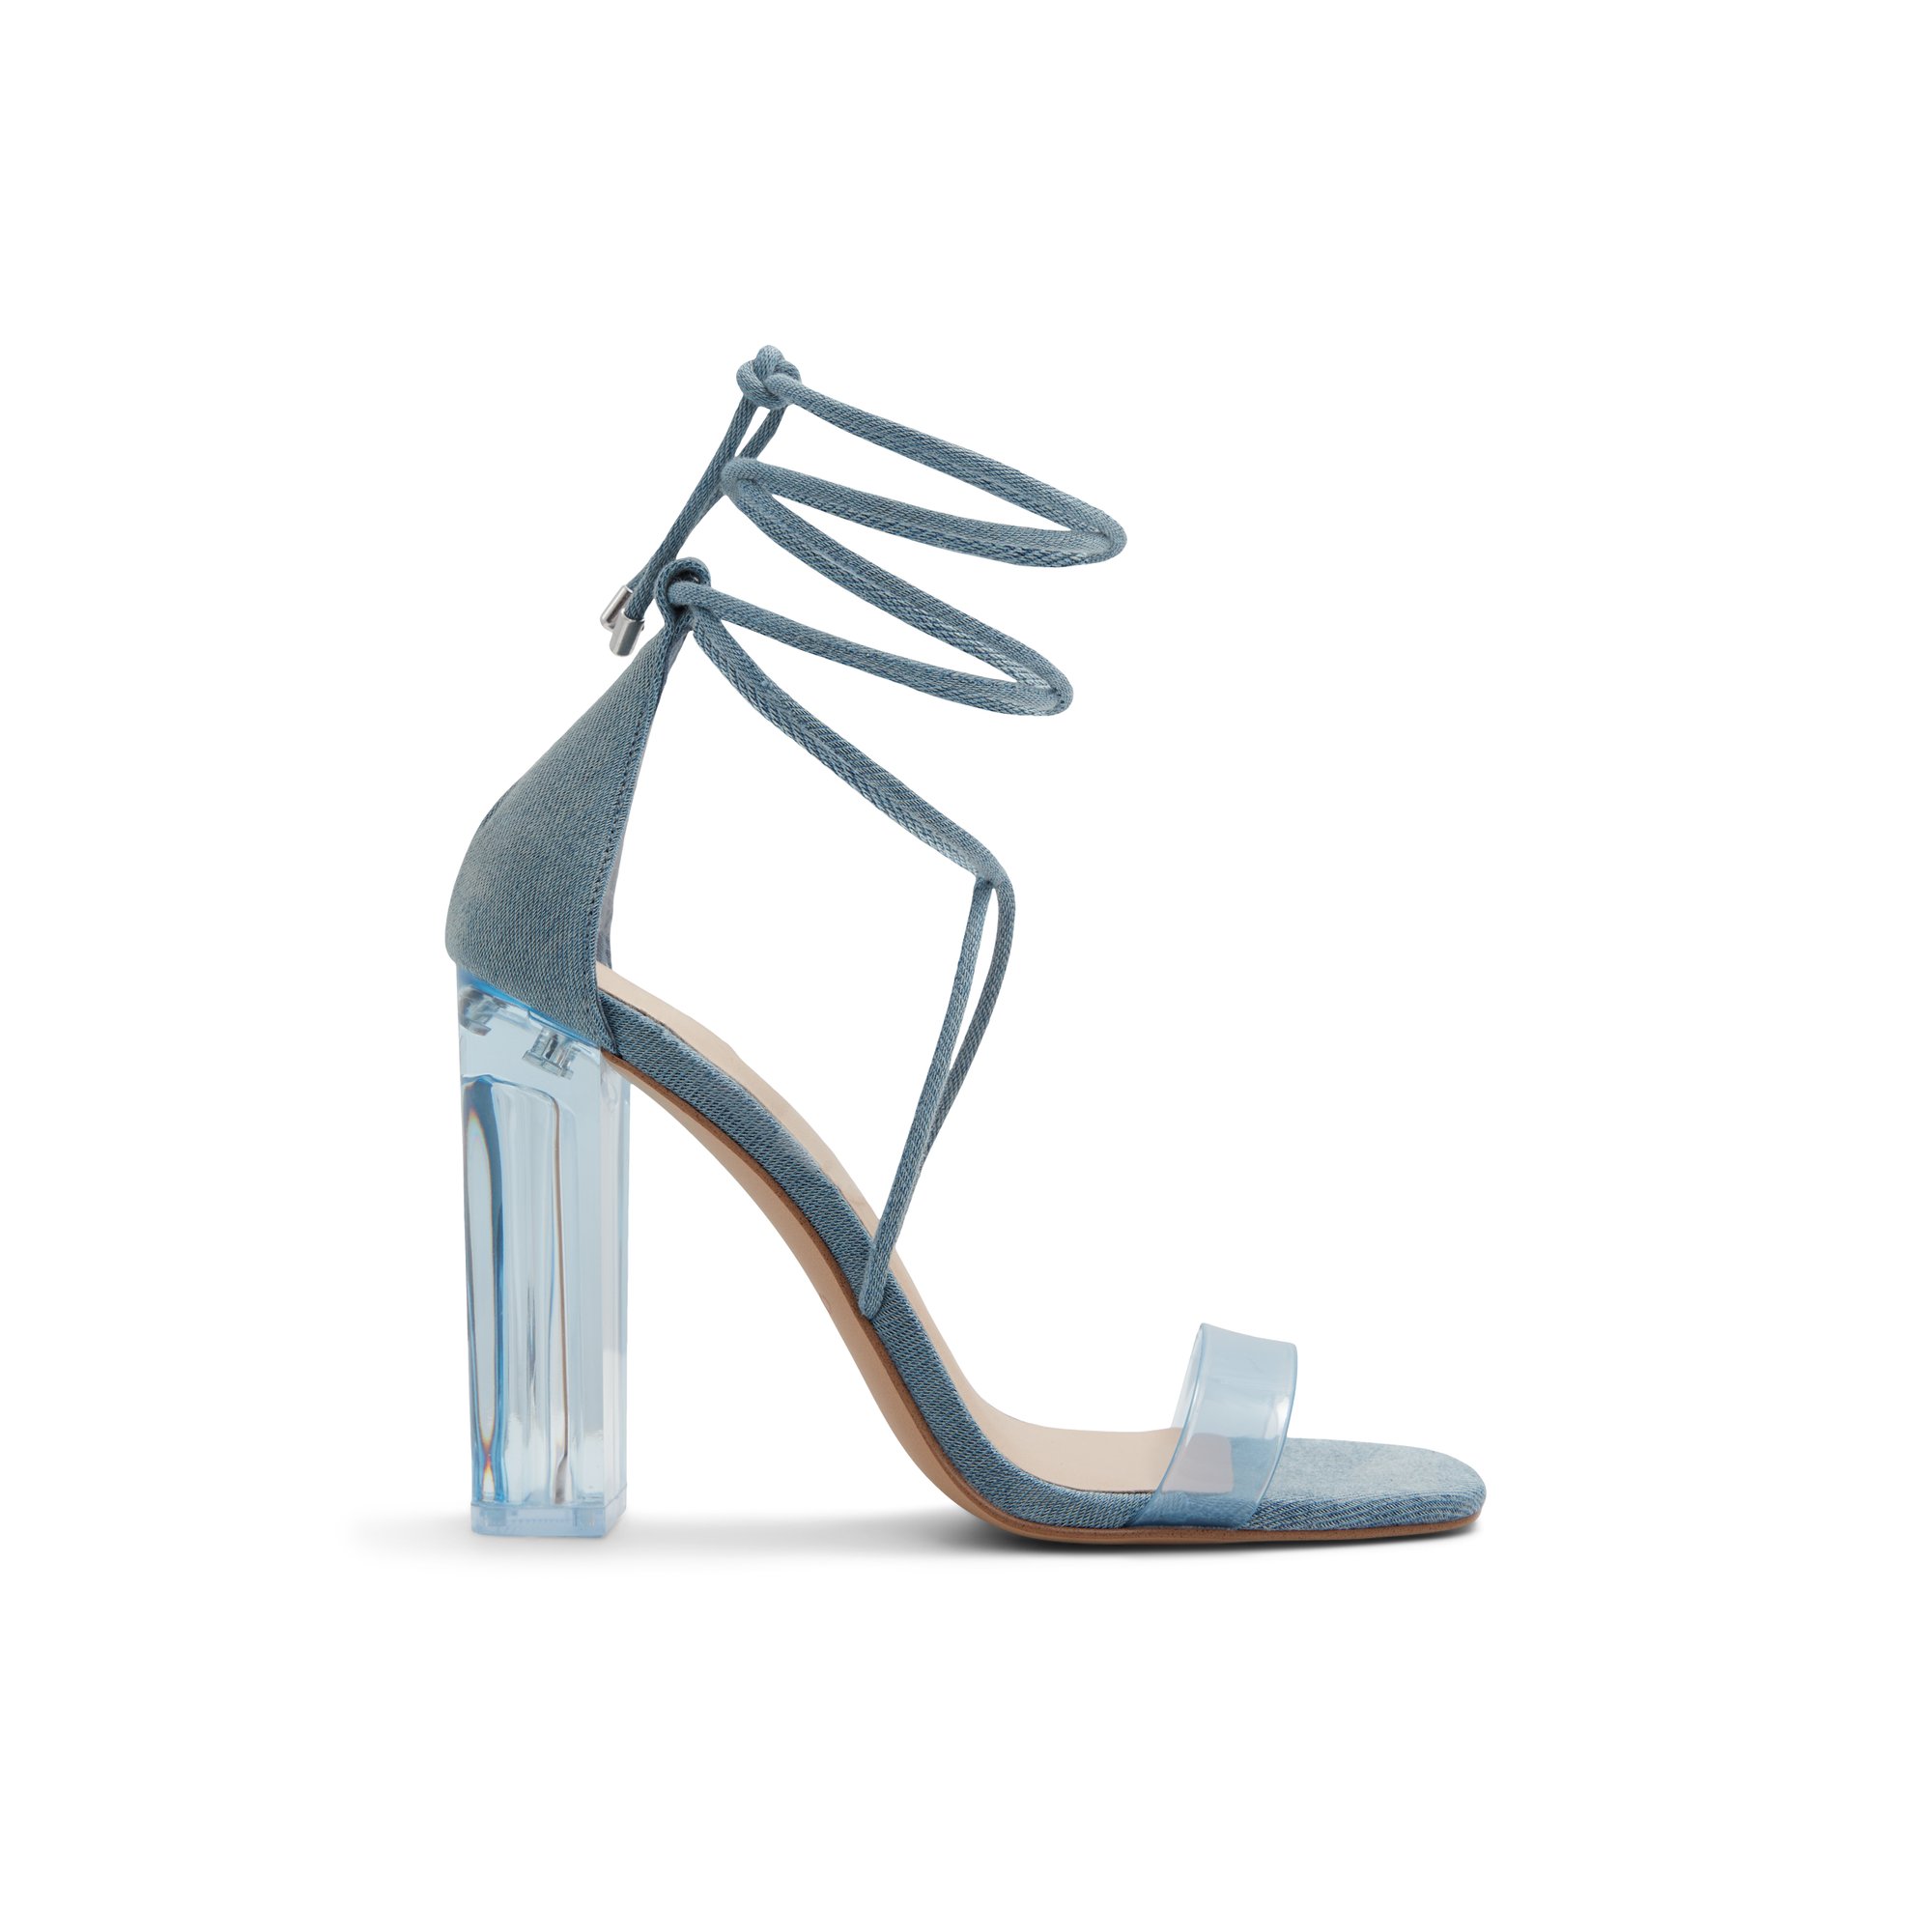 ALDO Onardonia - Women's Strappy Sandal Sandals - Blue